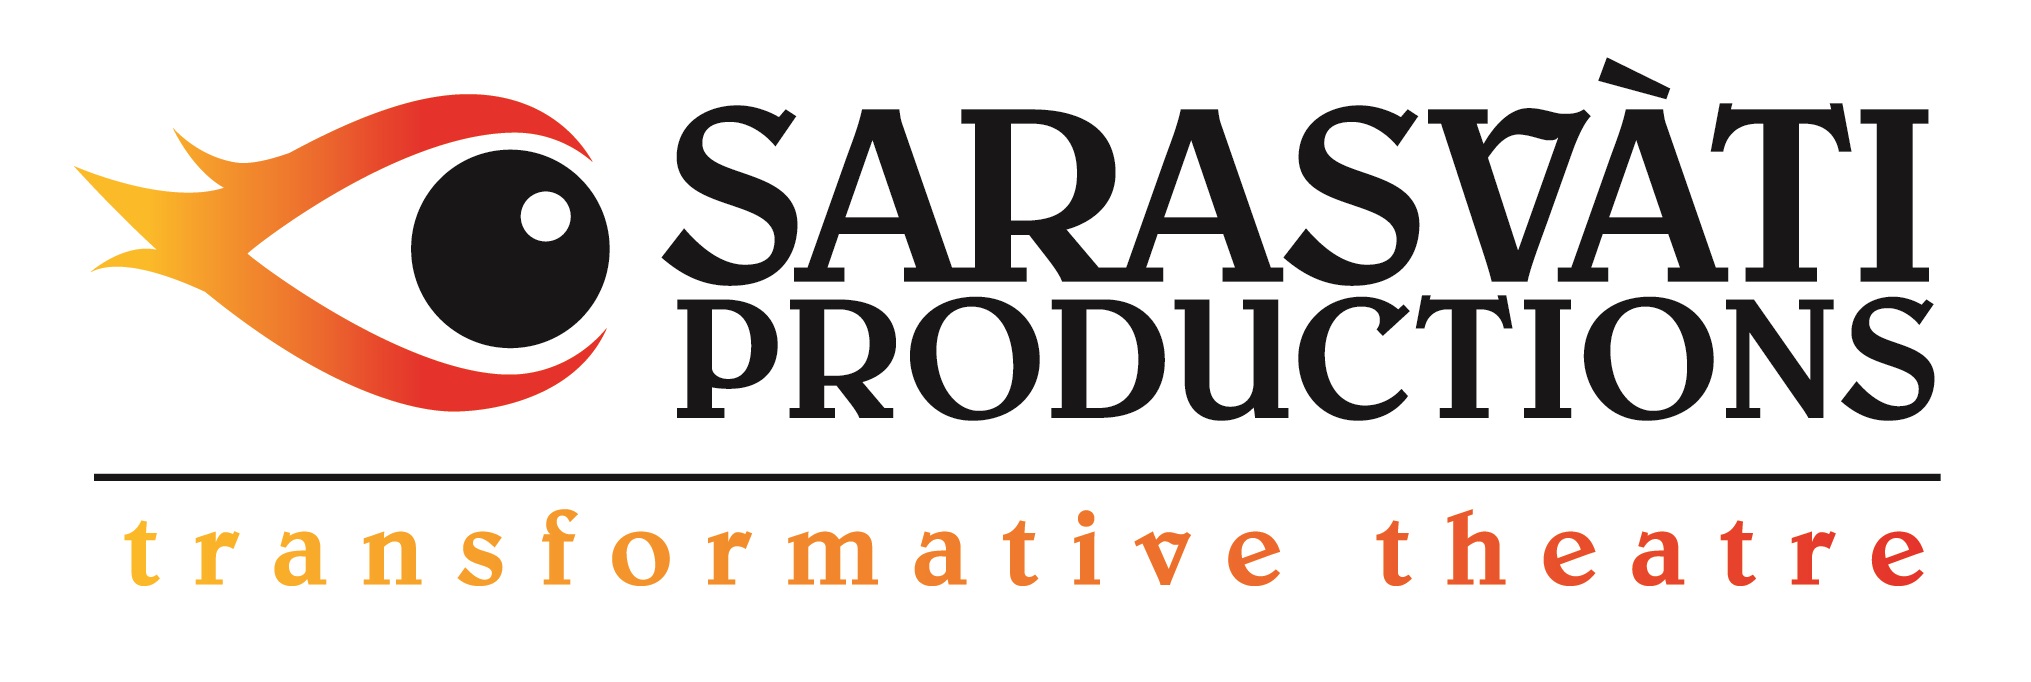 Sarasvati-logo-colour.jpg